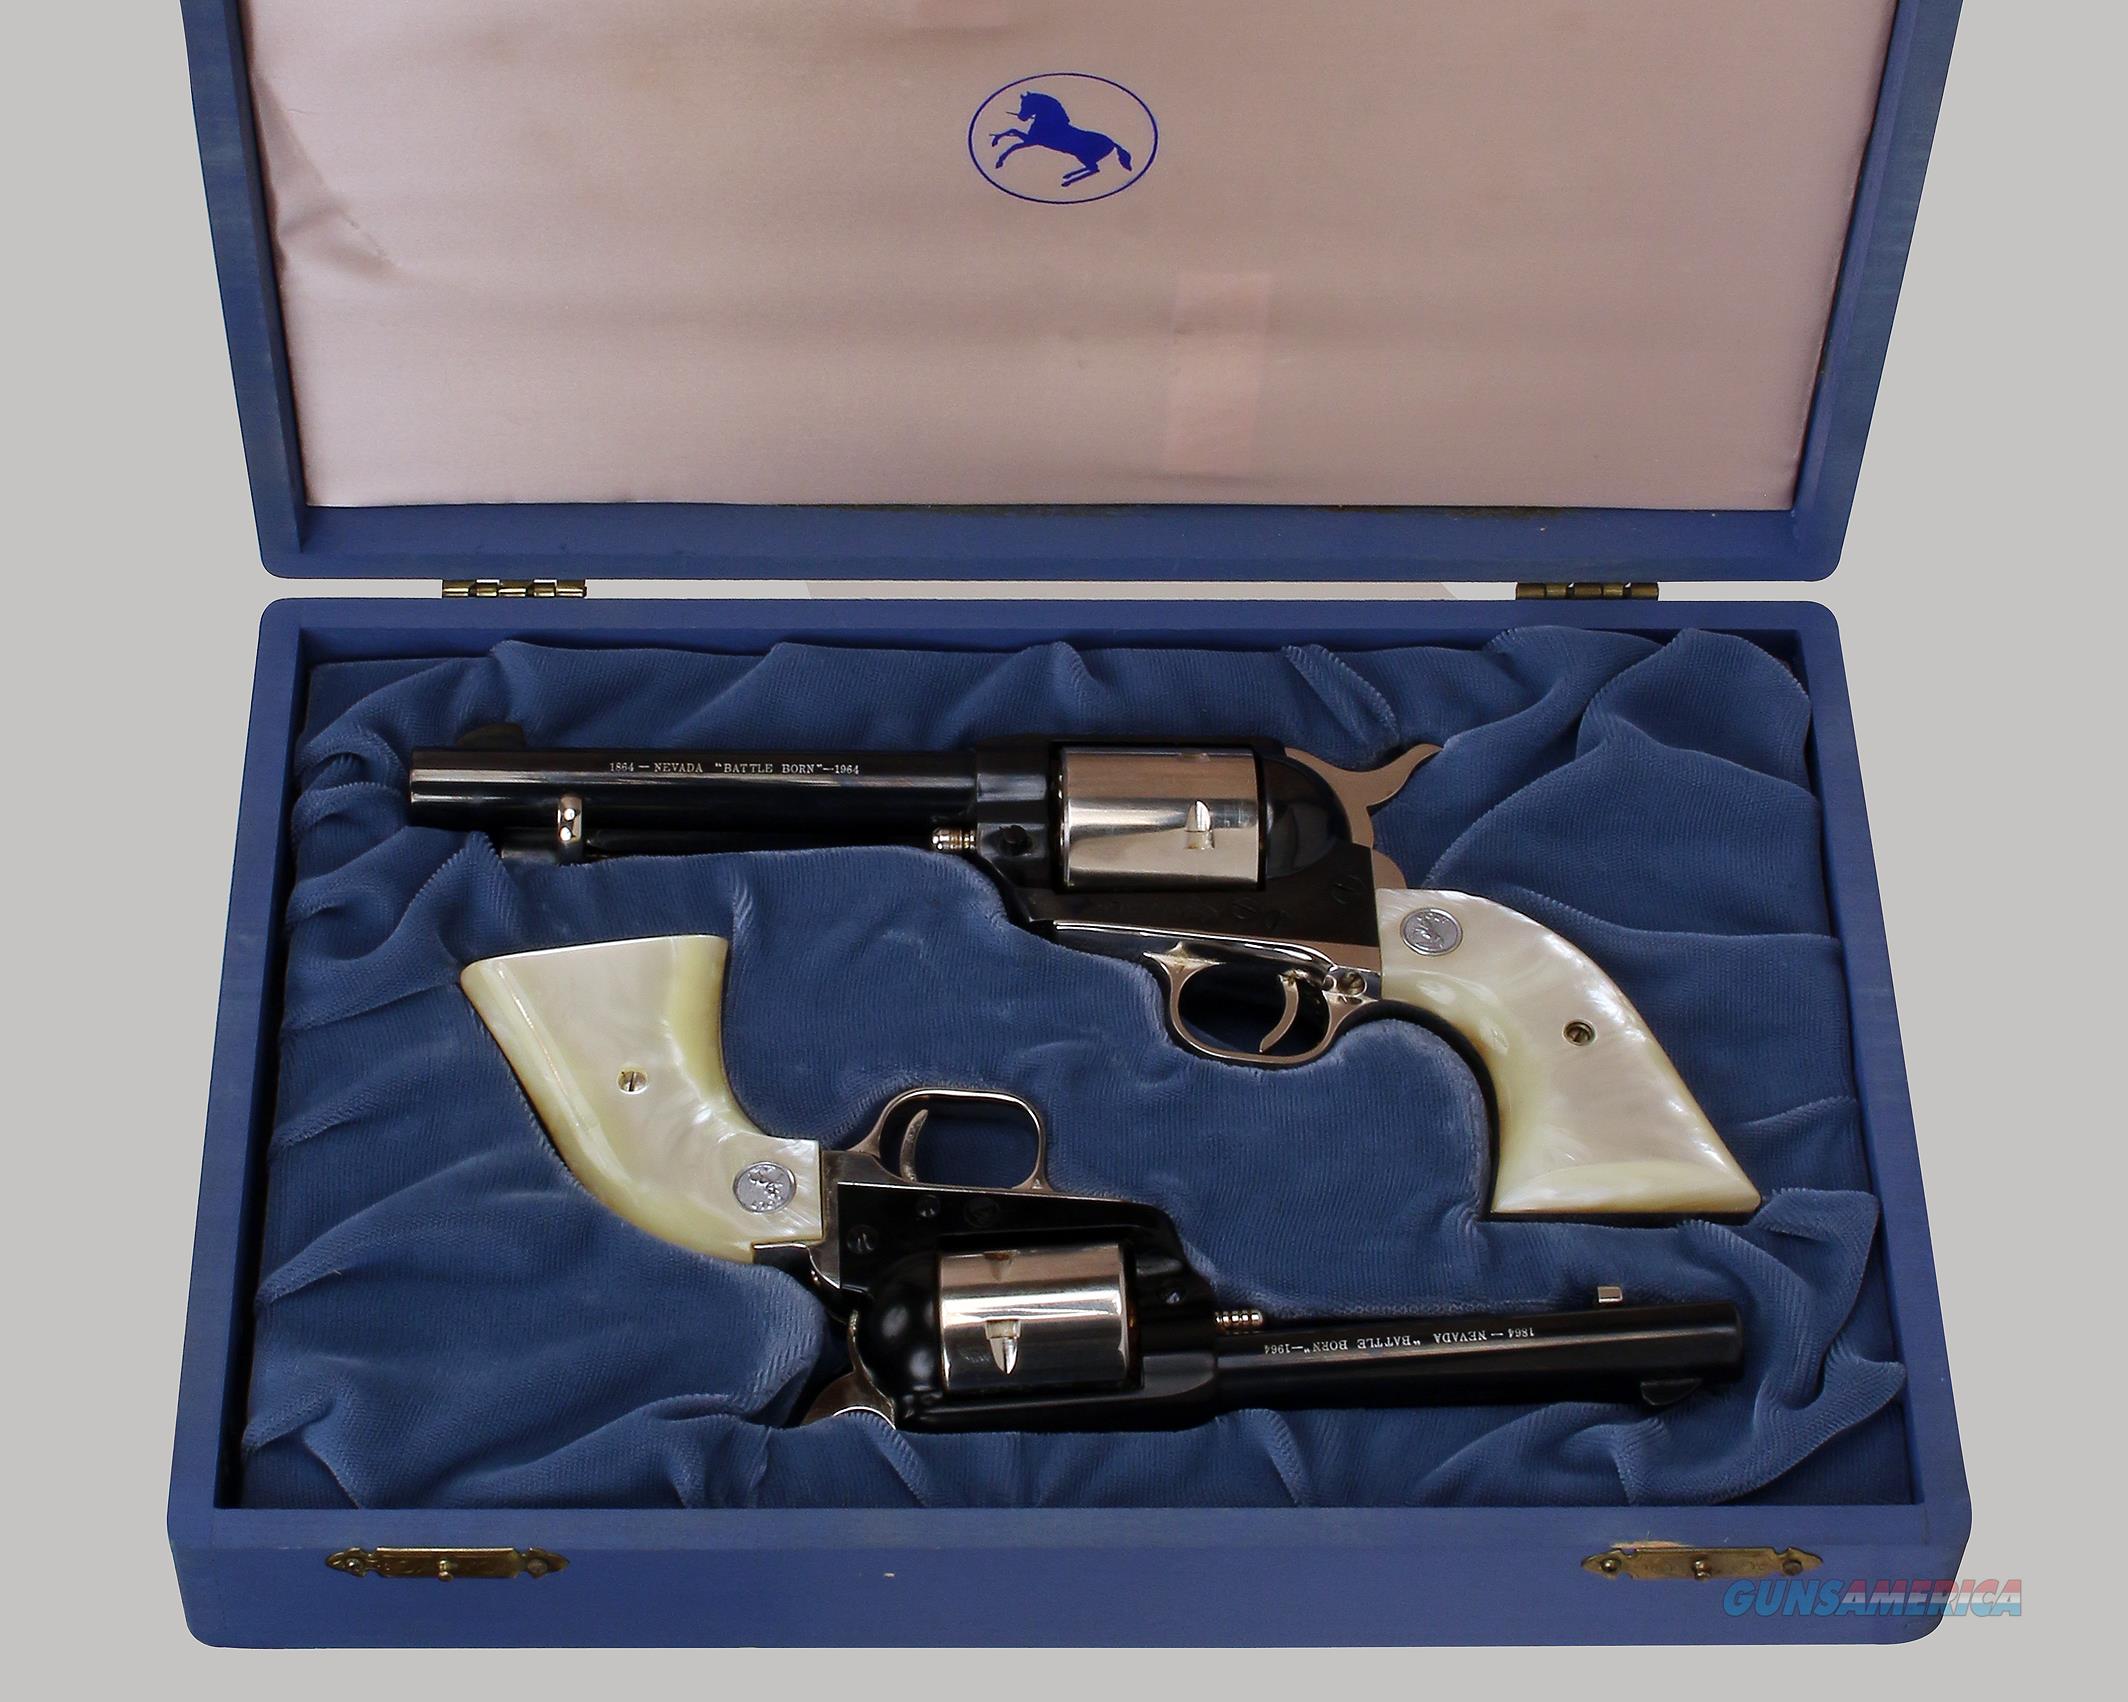 Colt Battle Born 22LR & 45LC Revolv... for sale at Gunsamerica.com ...